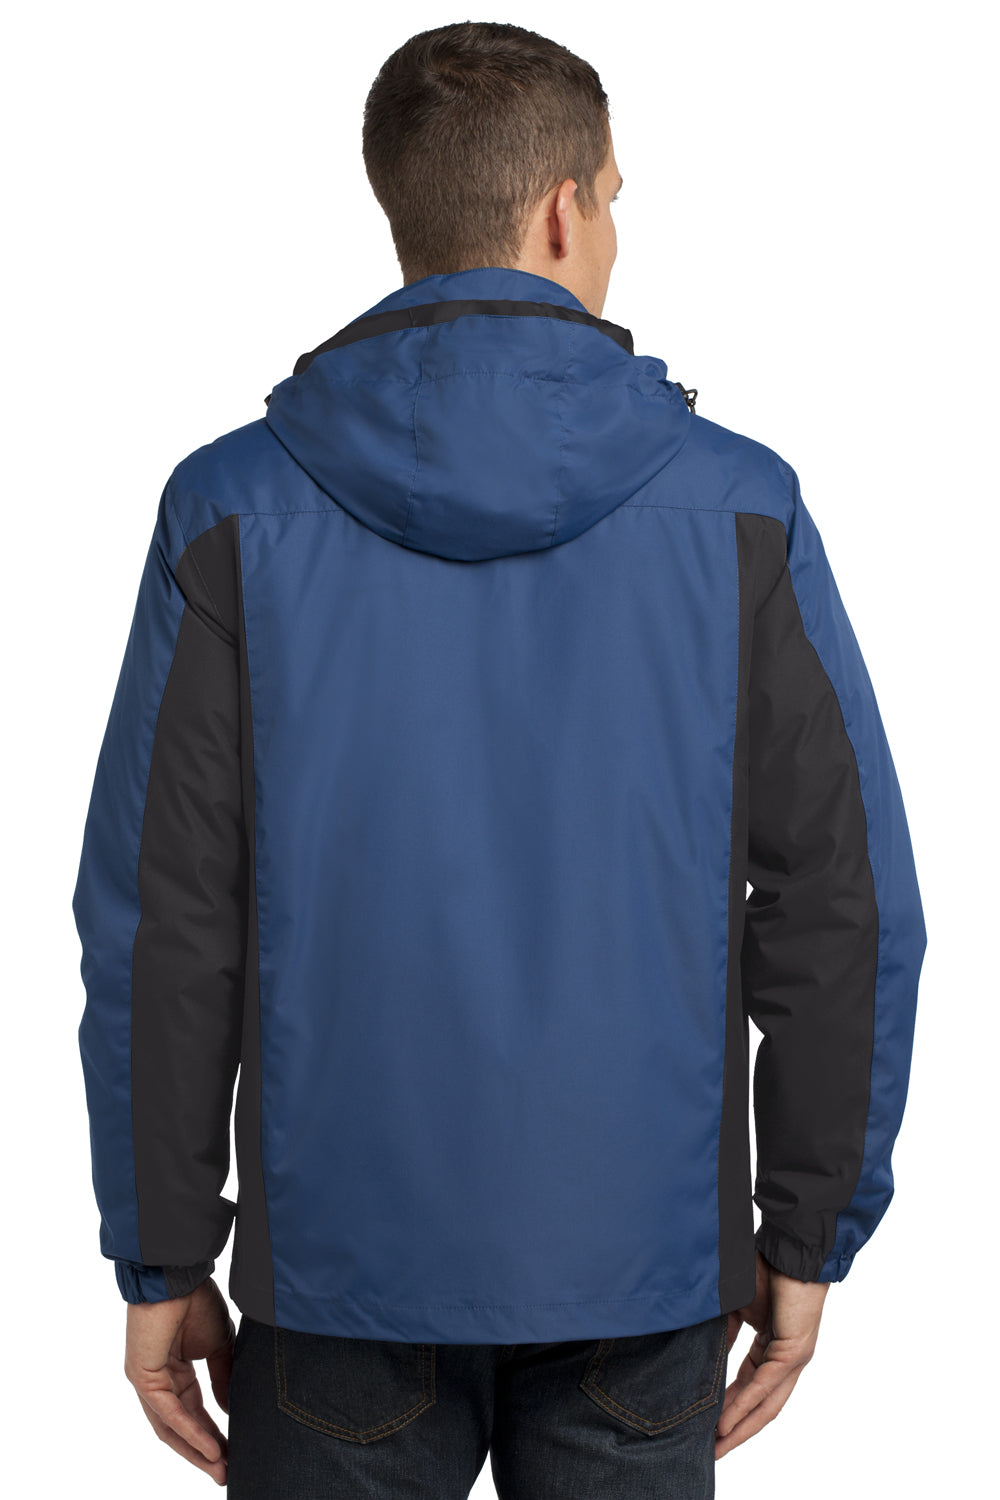 Port Authority J321 Mens 3-in-1 Wind & Water Resistant Full Zip Hooded Jacket Admiral Blue/Black/Grey Back